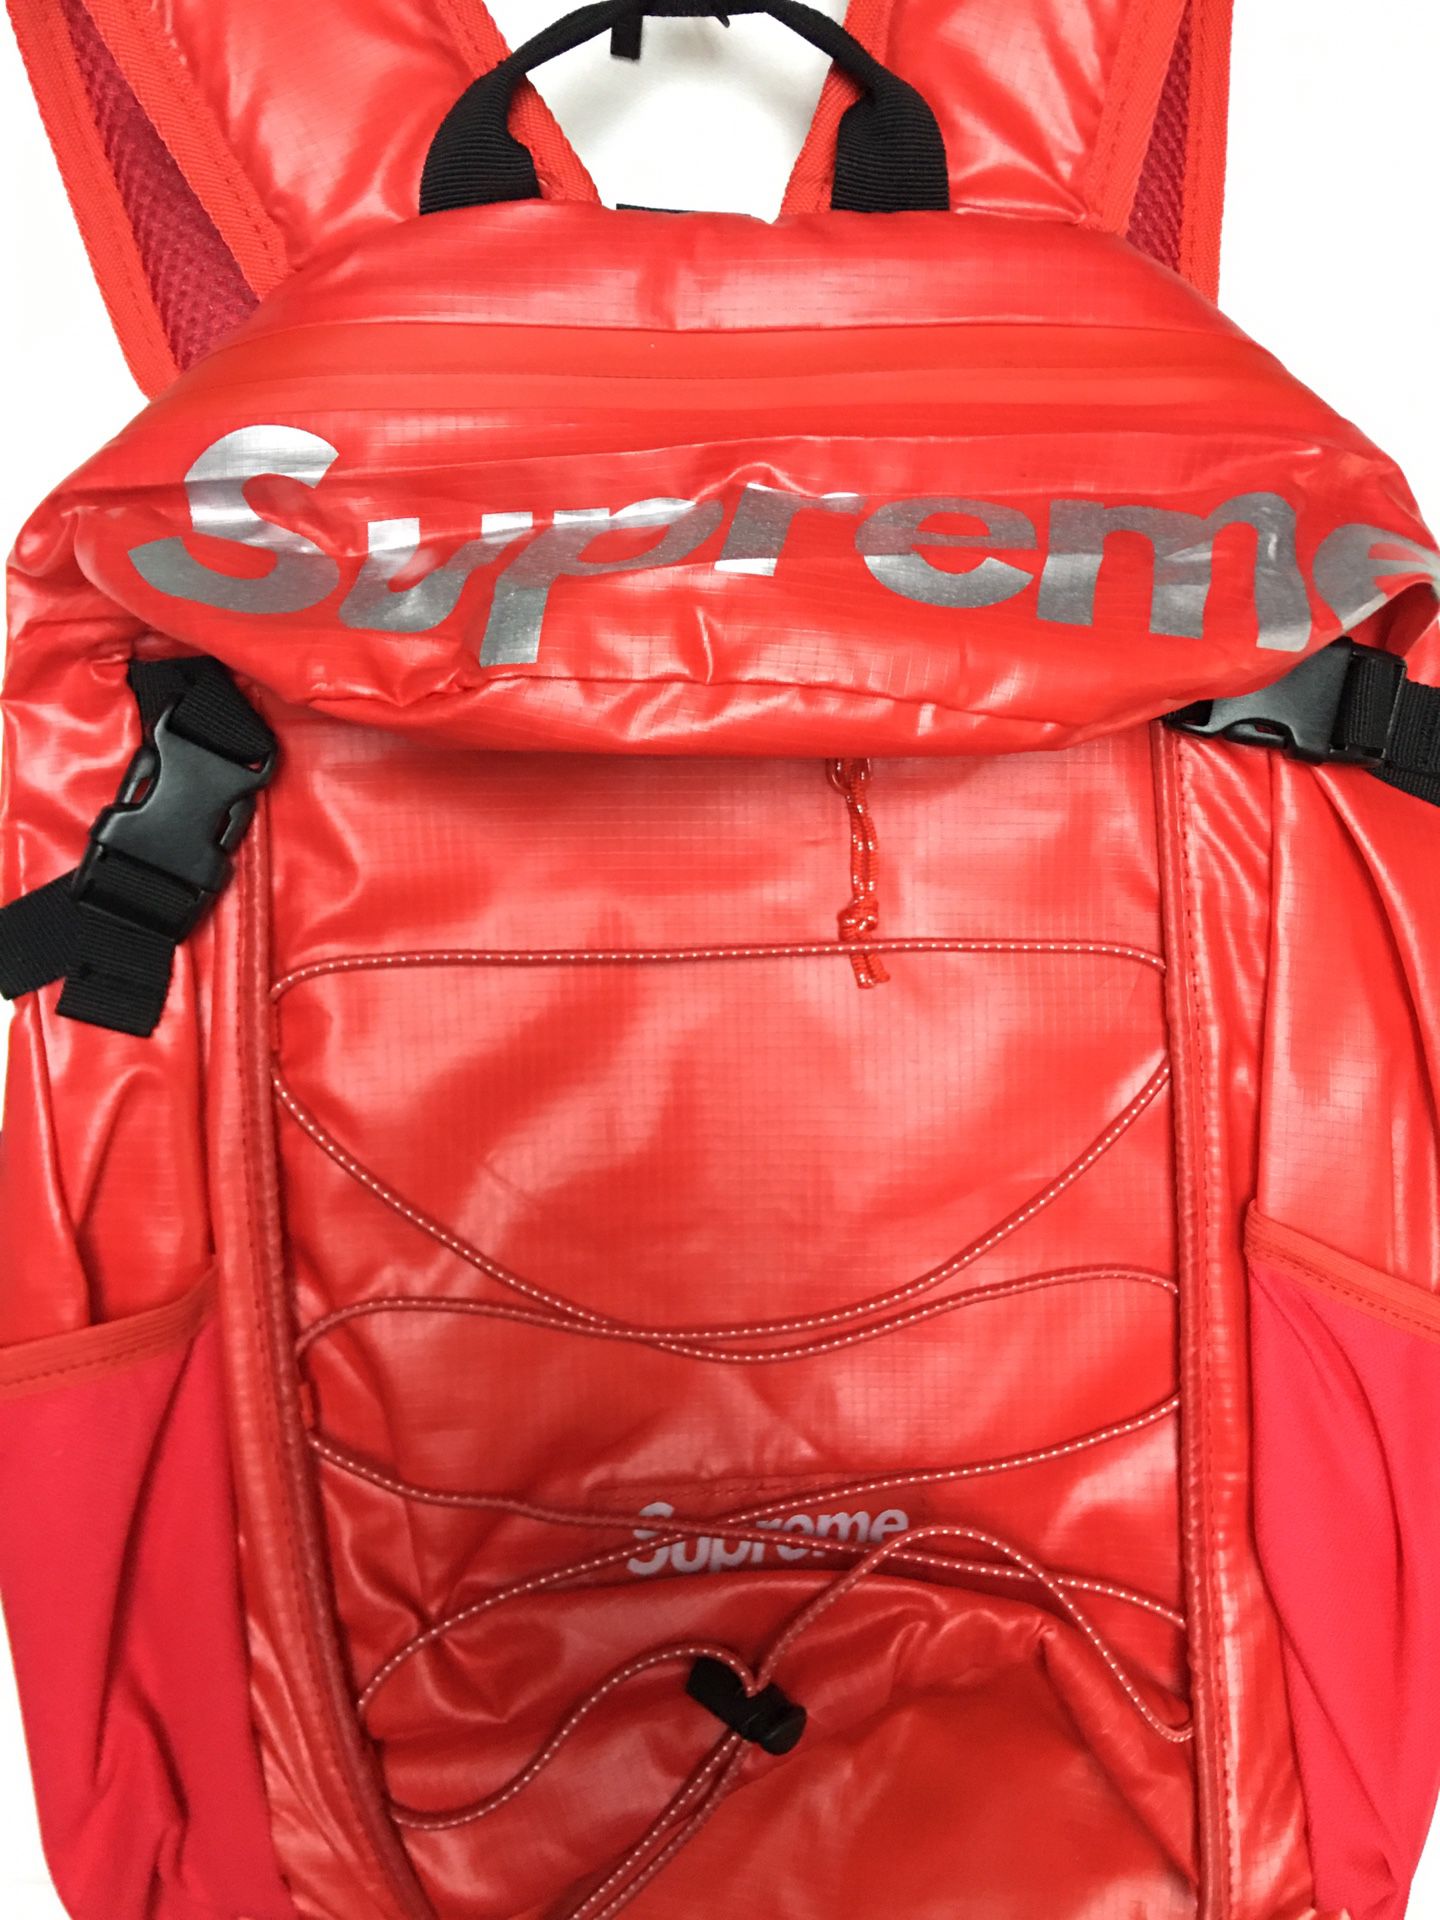 Red supreme backpack